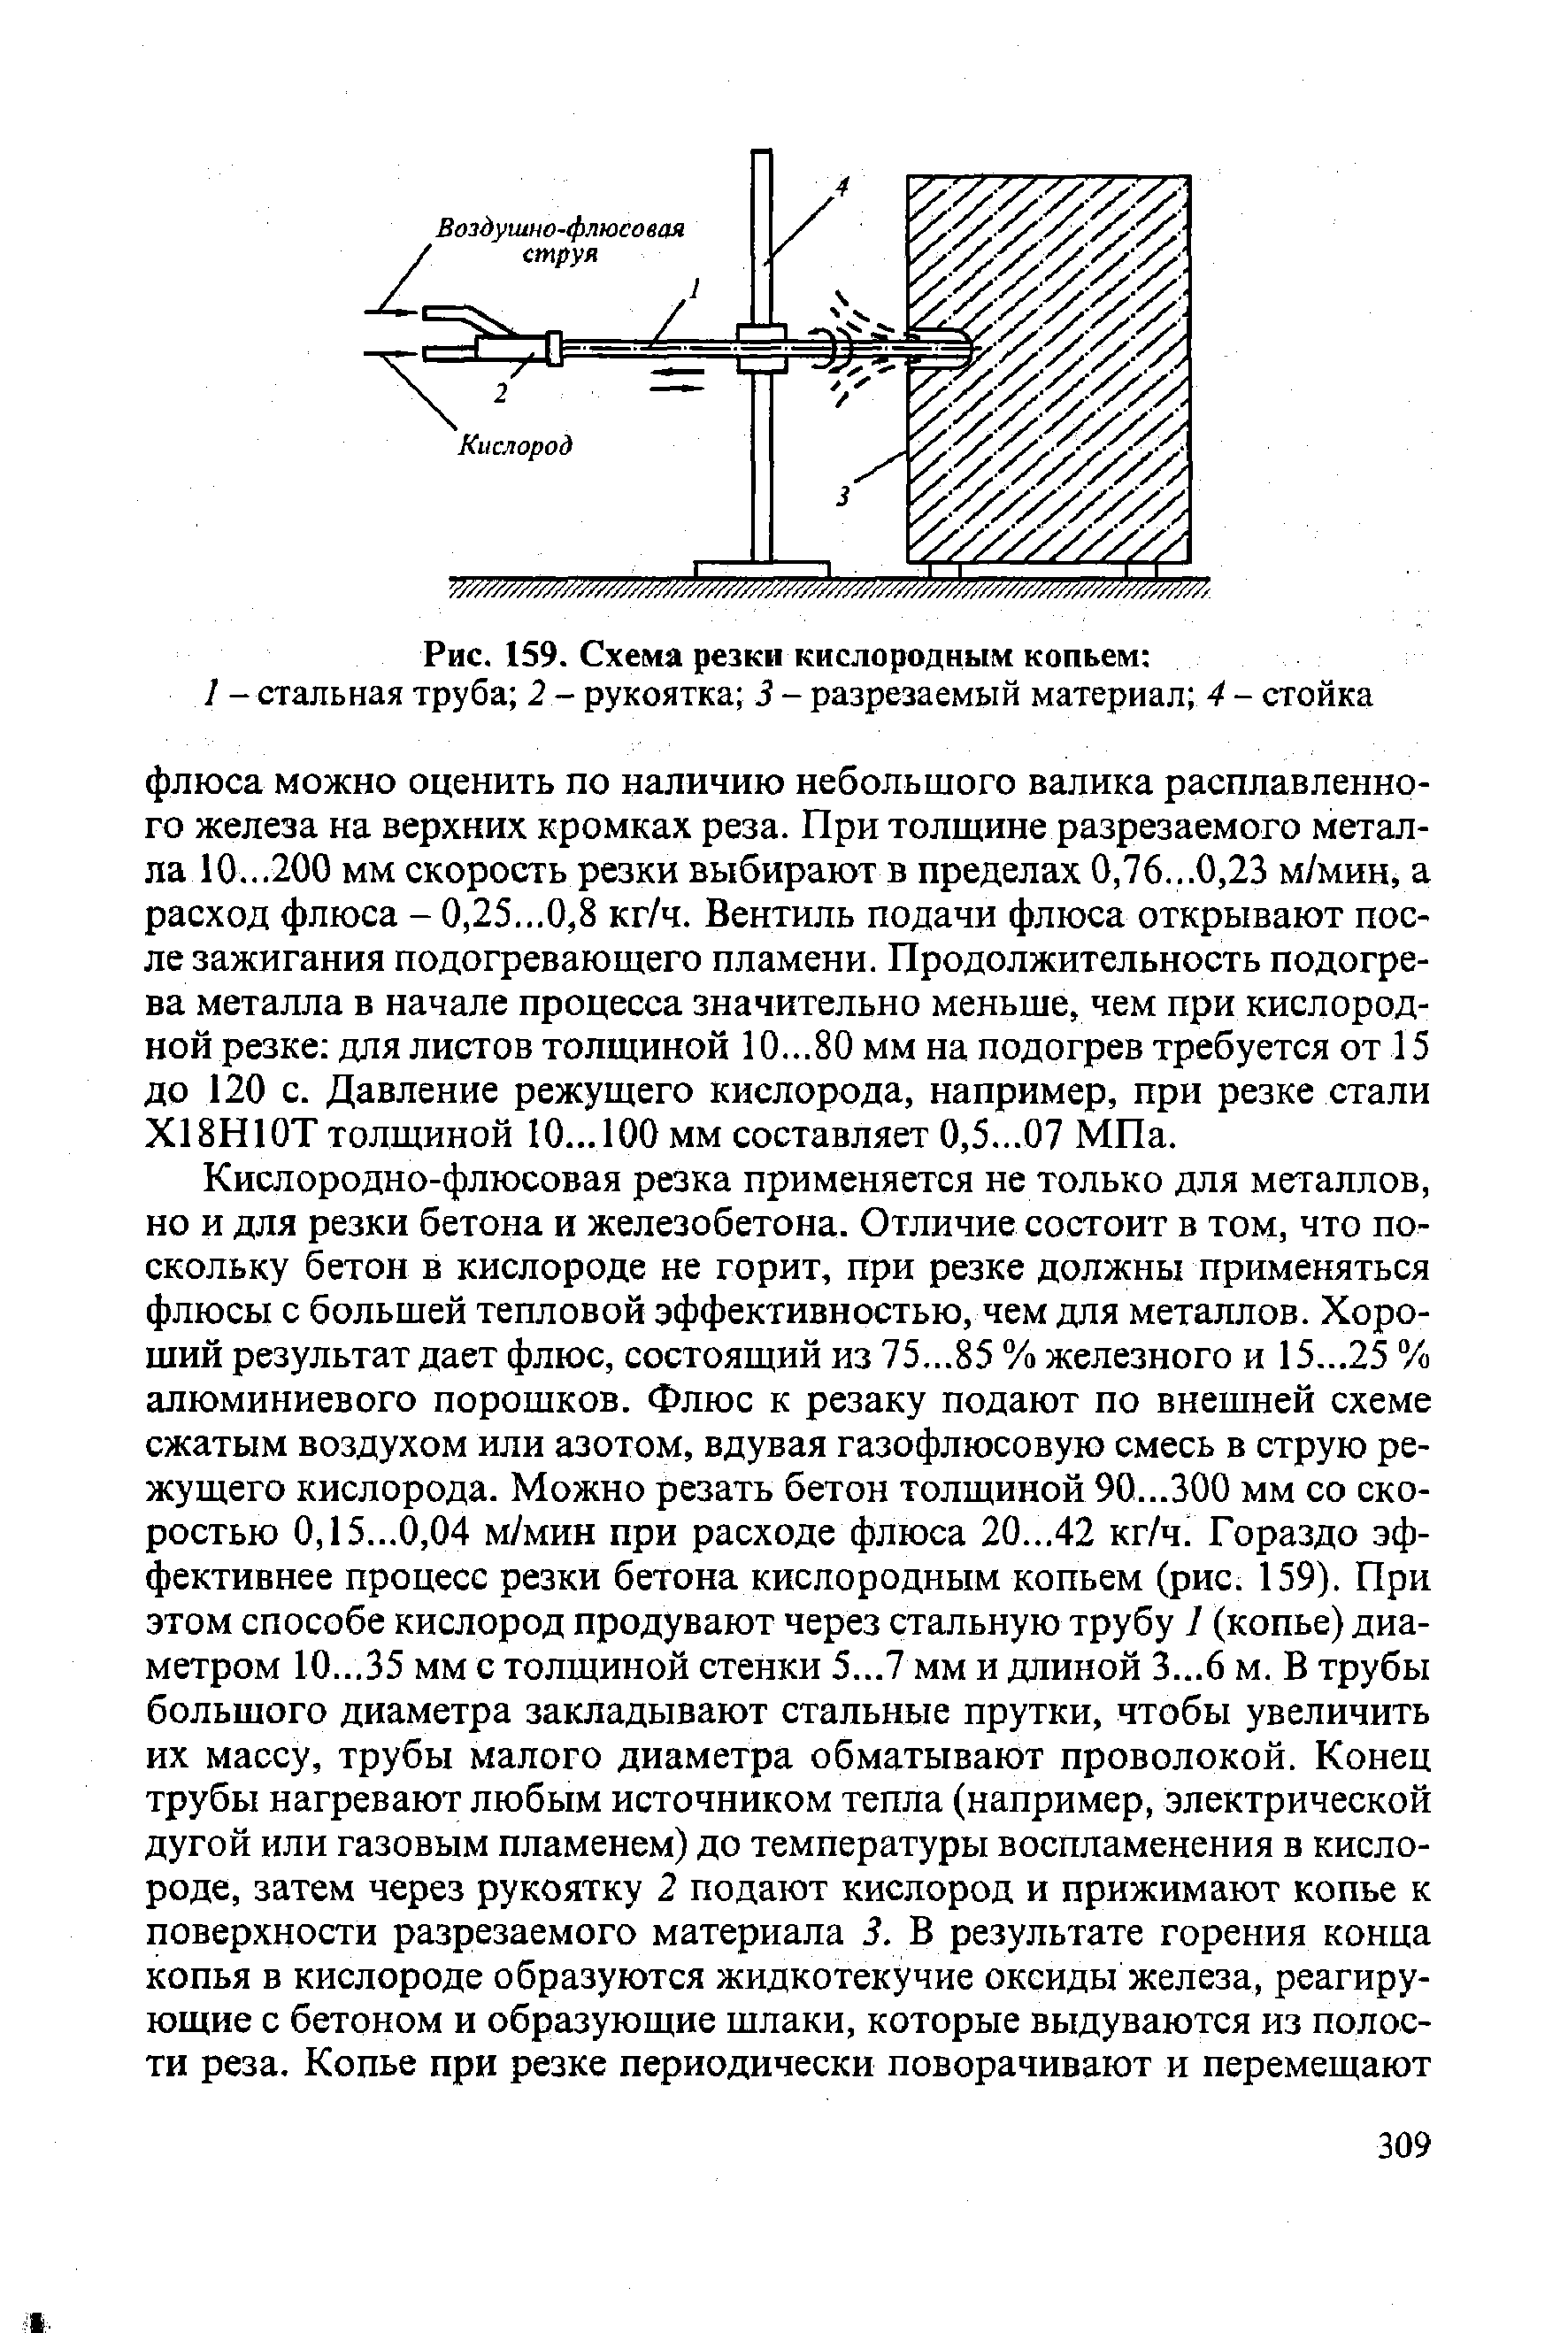 Рис. 159. Схема резки кислородным копьем 
